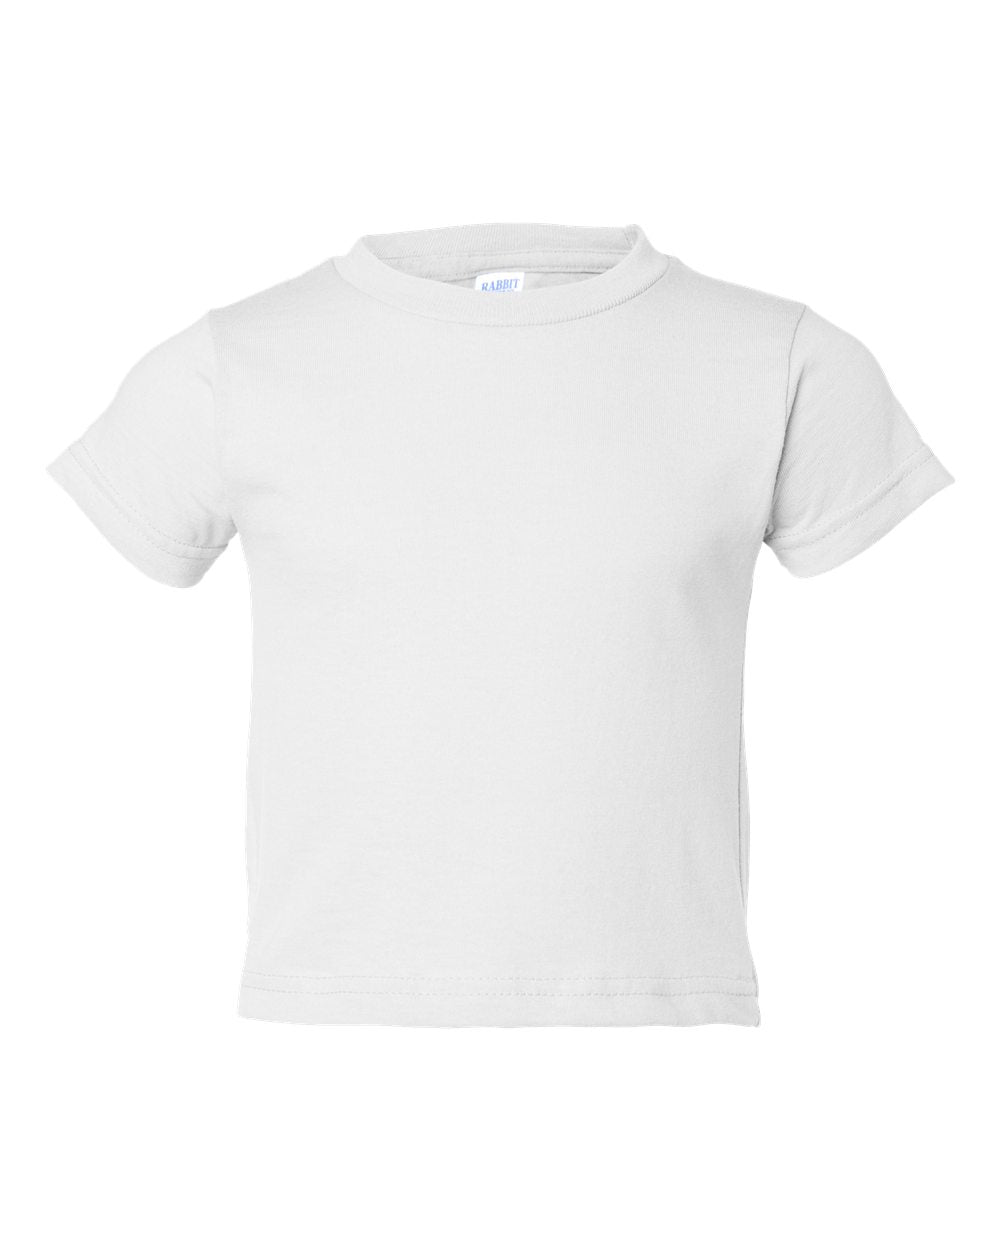 Toddler Jersey T-shirt, 100% Cotton, White